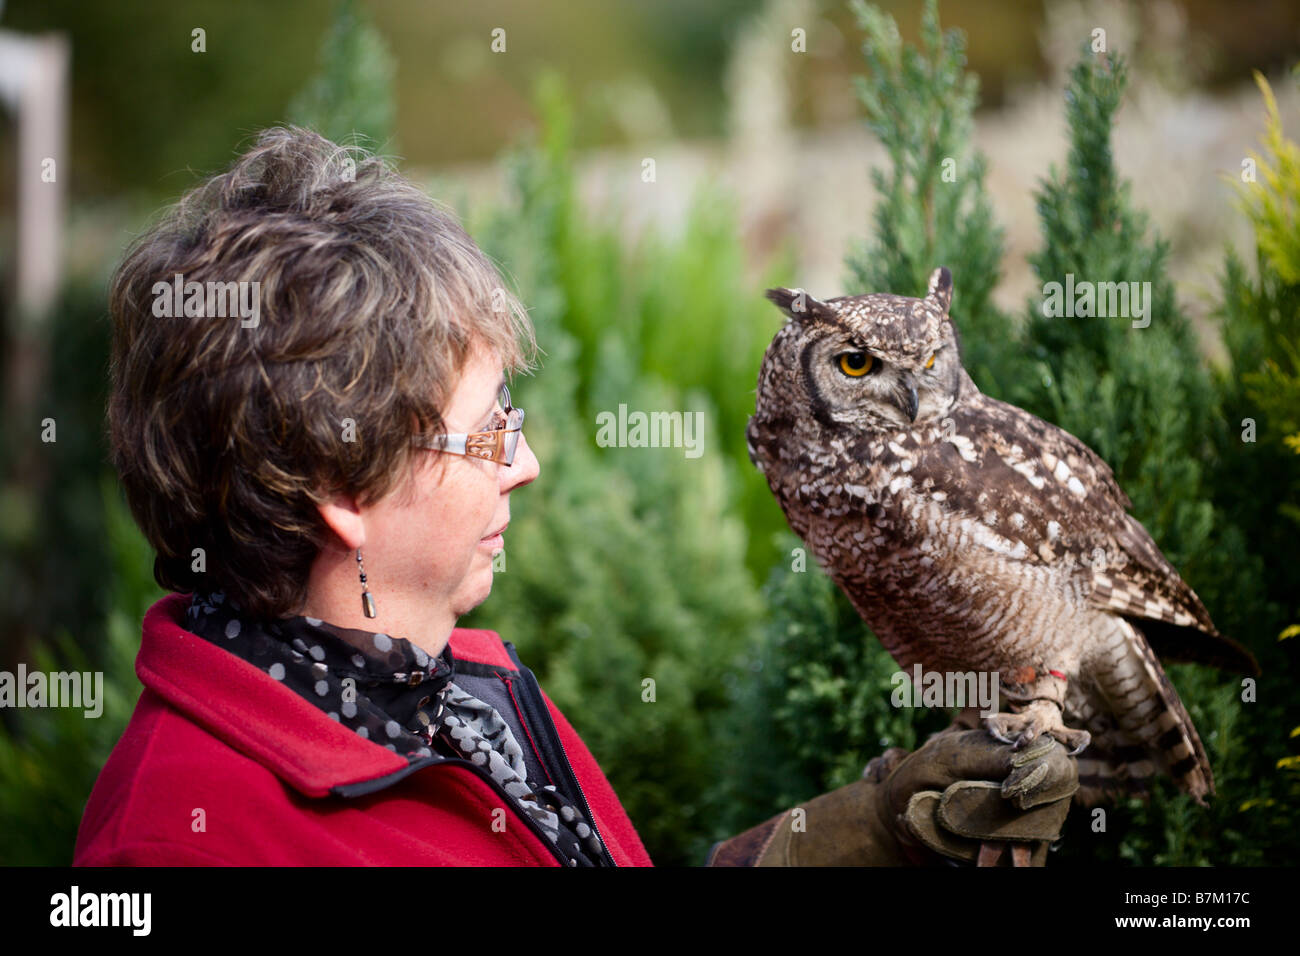 European Eagle Owl with woman handler Stock Photo